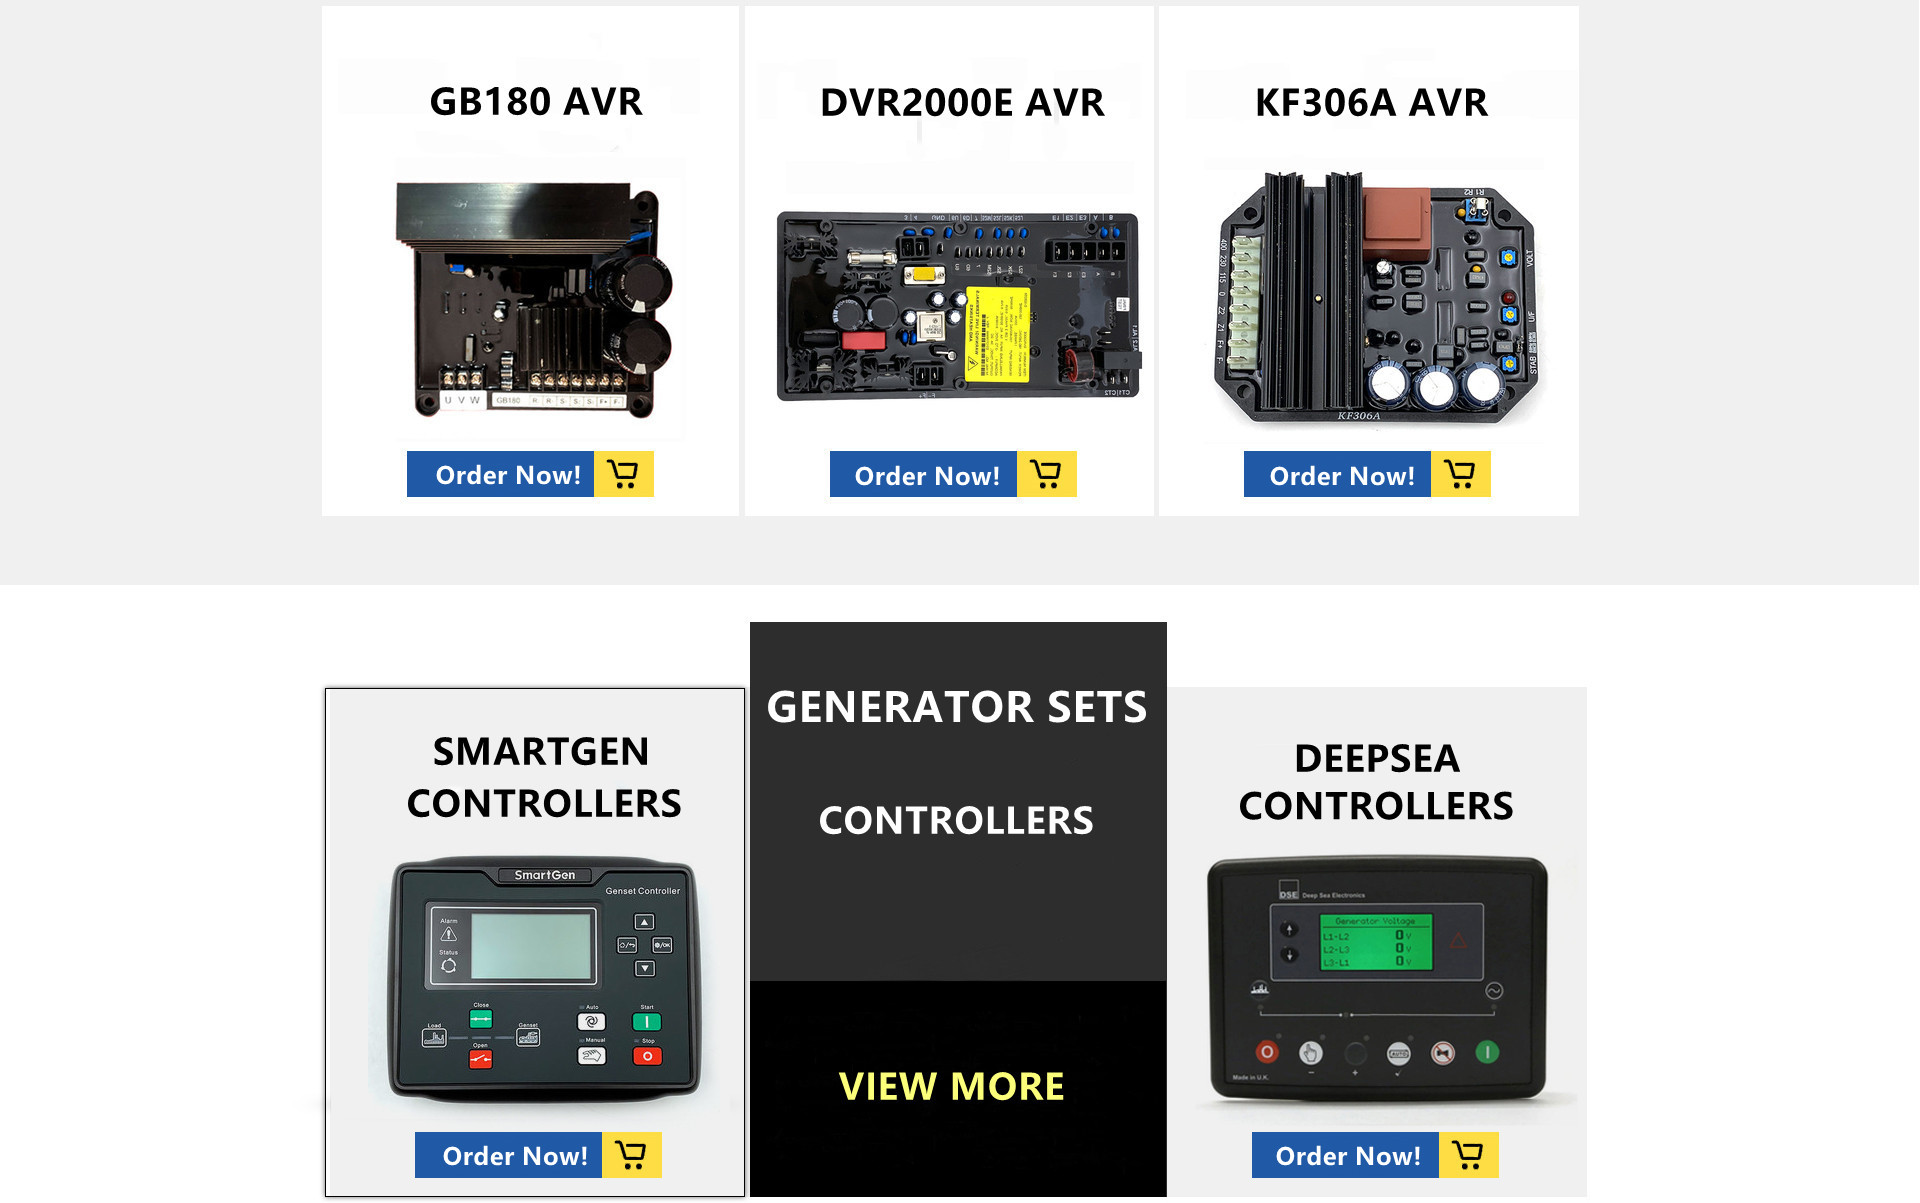 //cdnus.glob also.com/letongenerator/3-Diesel-generator-parts.jpg